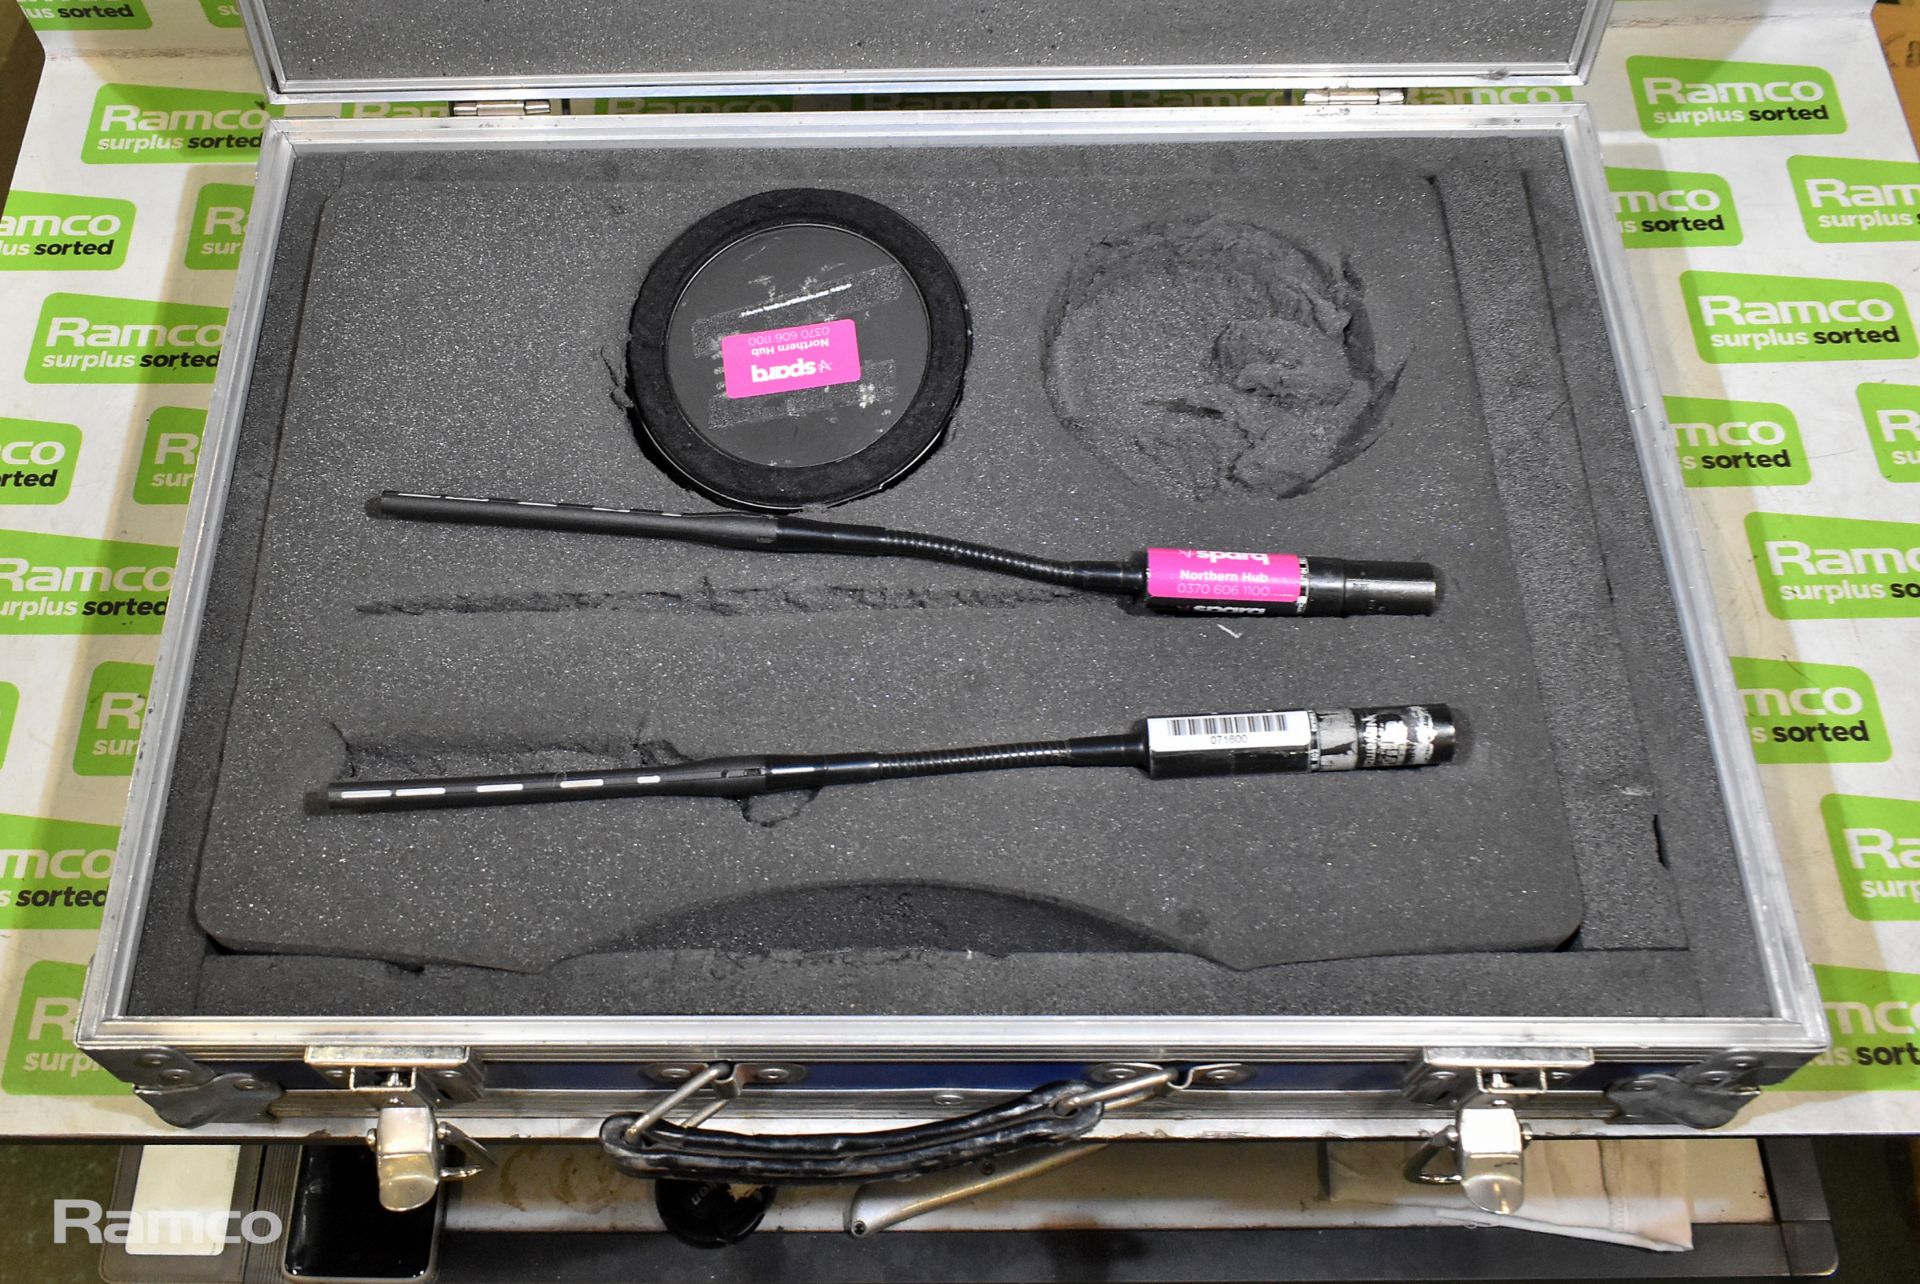 2x Beyerdynamic SHM 803 lectern microphones and 1 baseplate in flightcase - 55 x 32 x 15cm - Image 2 of 5